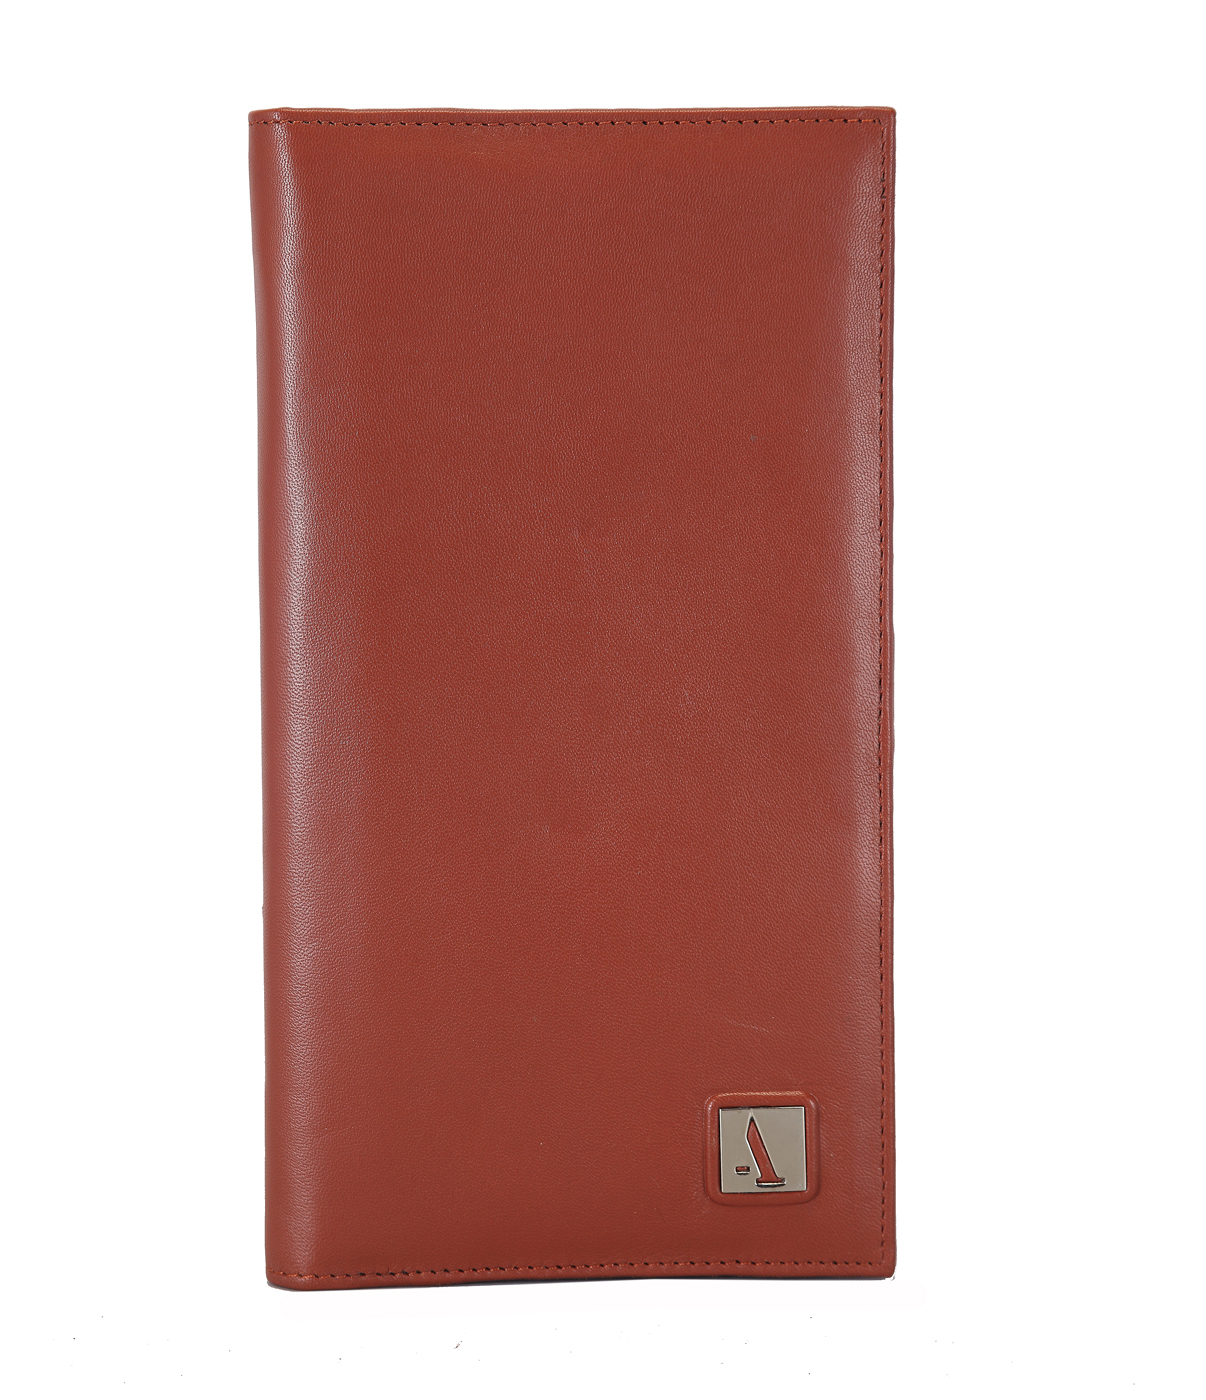 Wallet-Novio-Travel Document Wallet In Soft Genuine Leather - Tan